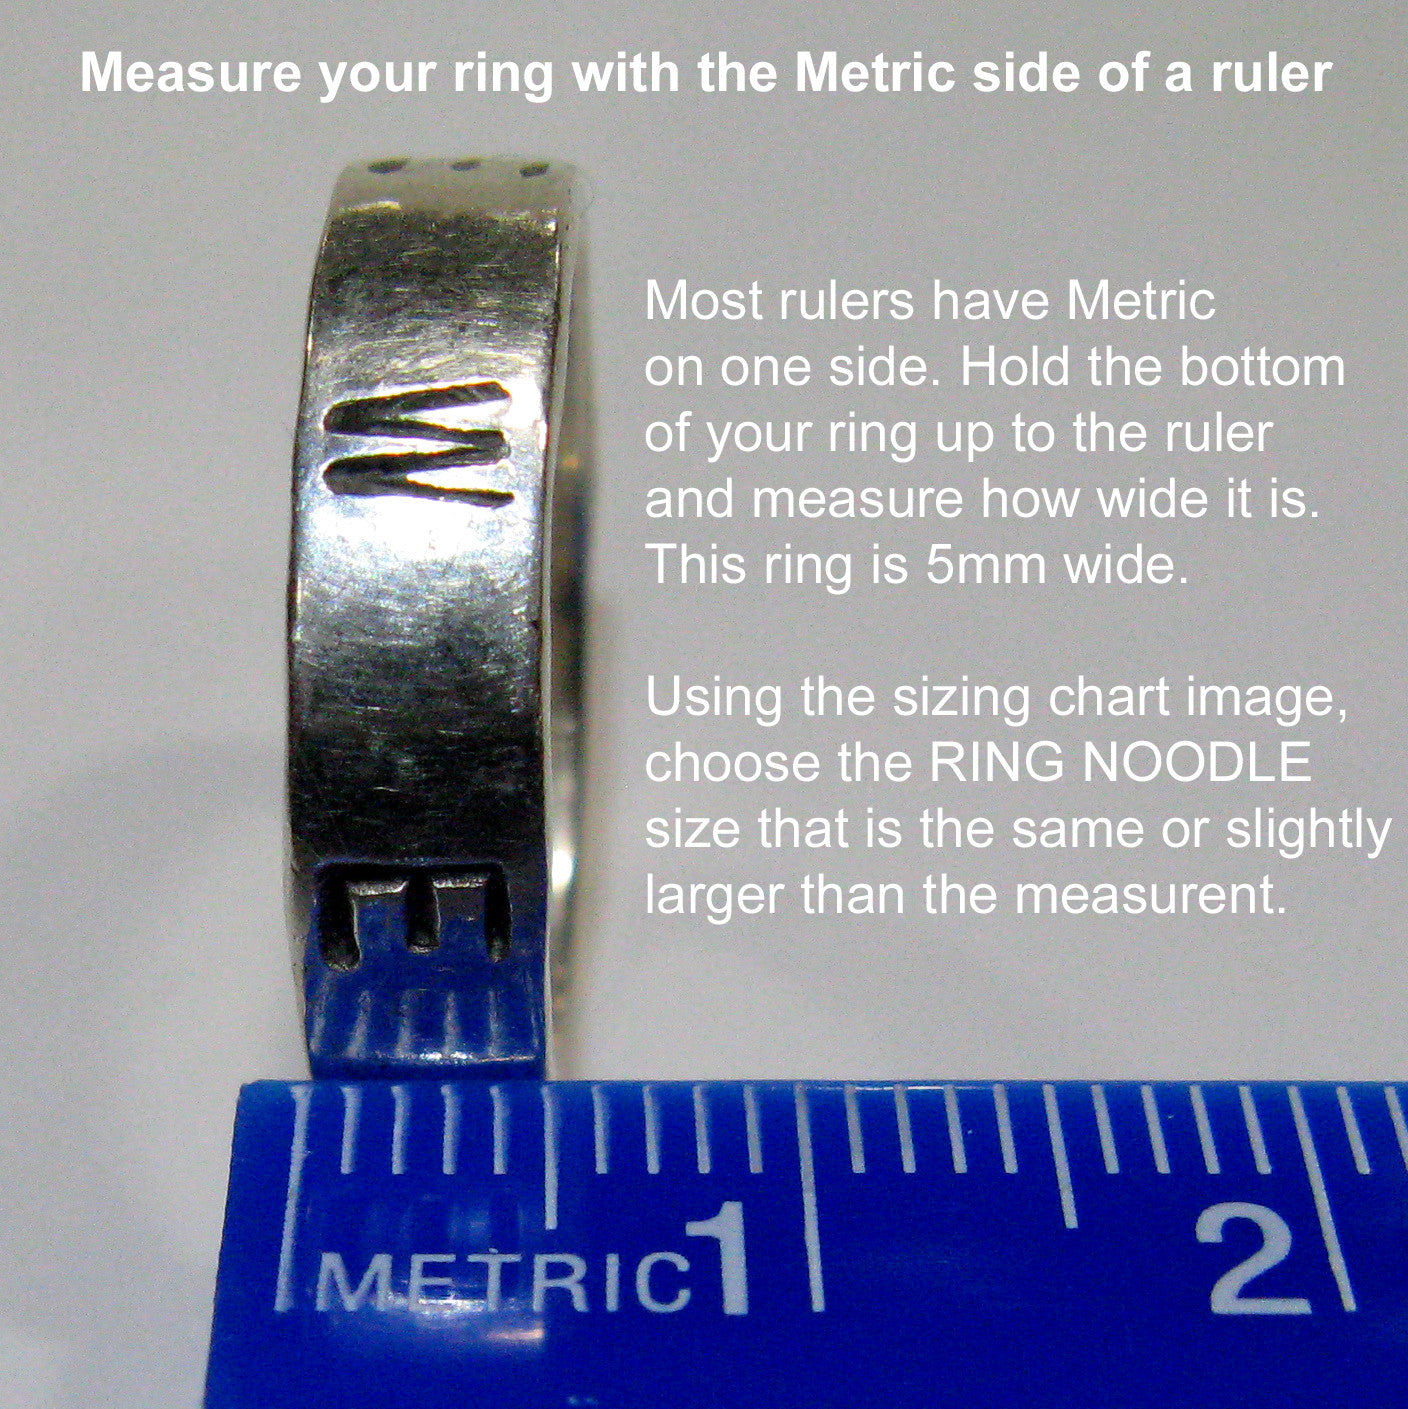 EZsizer - Ring Guard / Ring Size Reducer